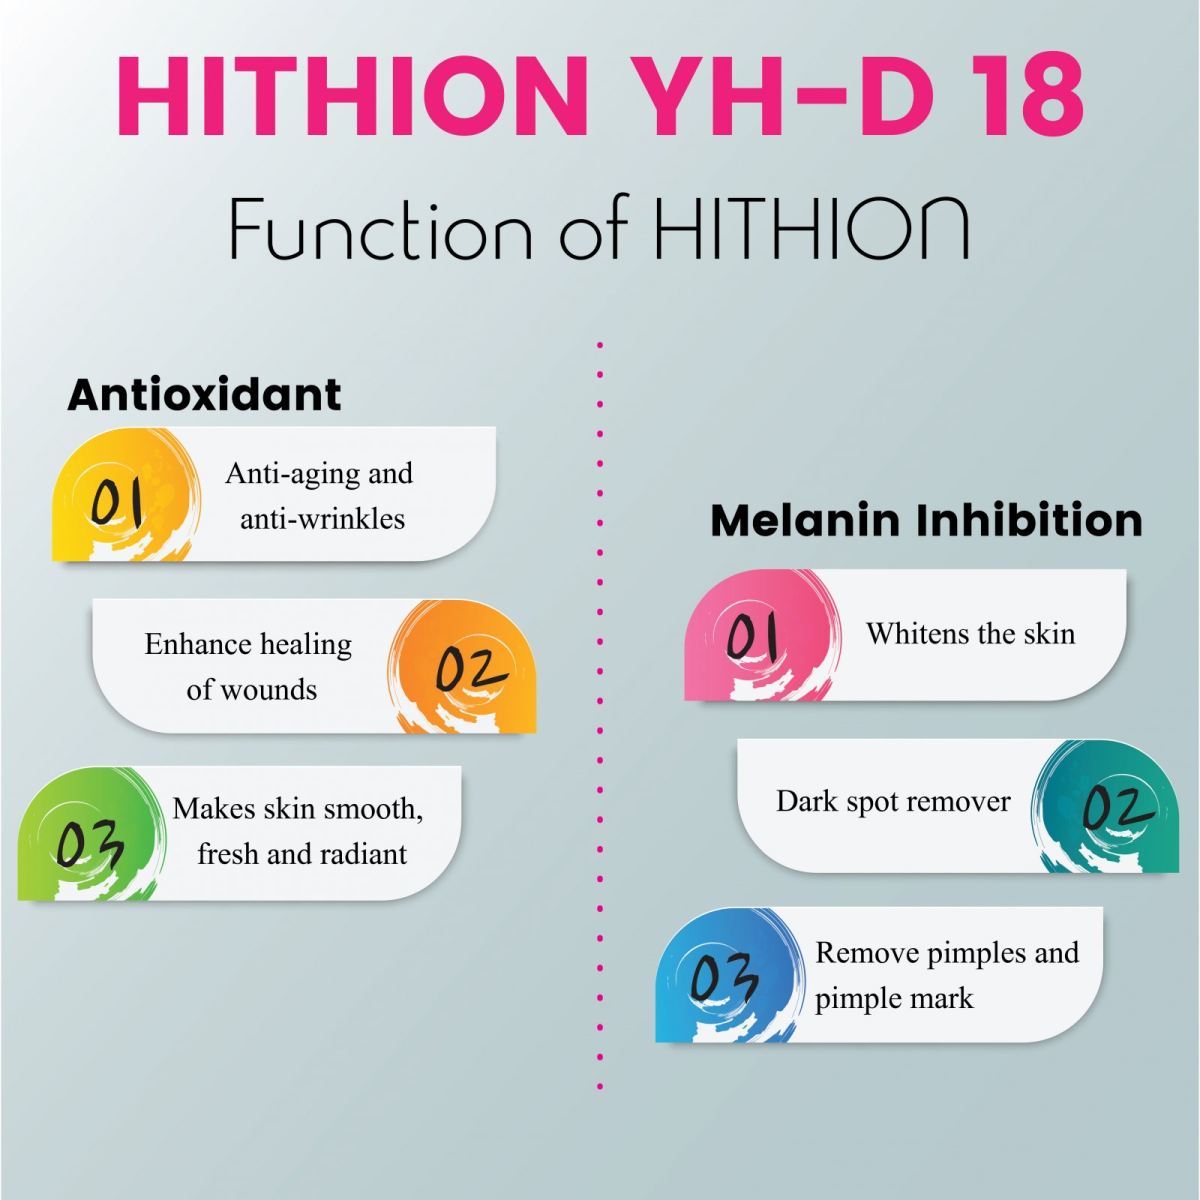 Hithion - Useful as antioxidant & skin bright enhancement